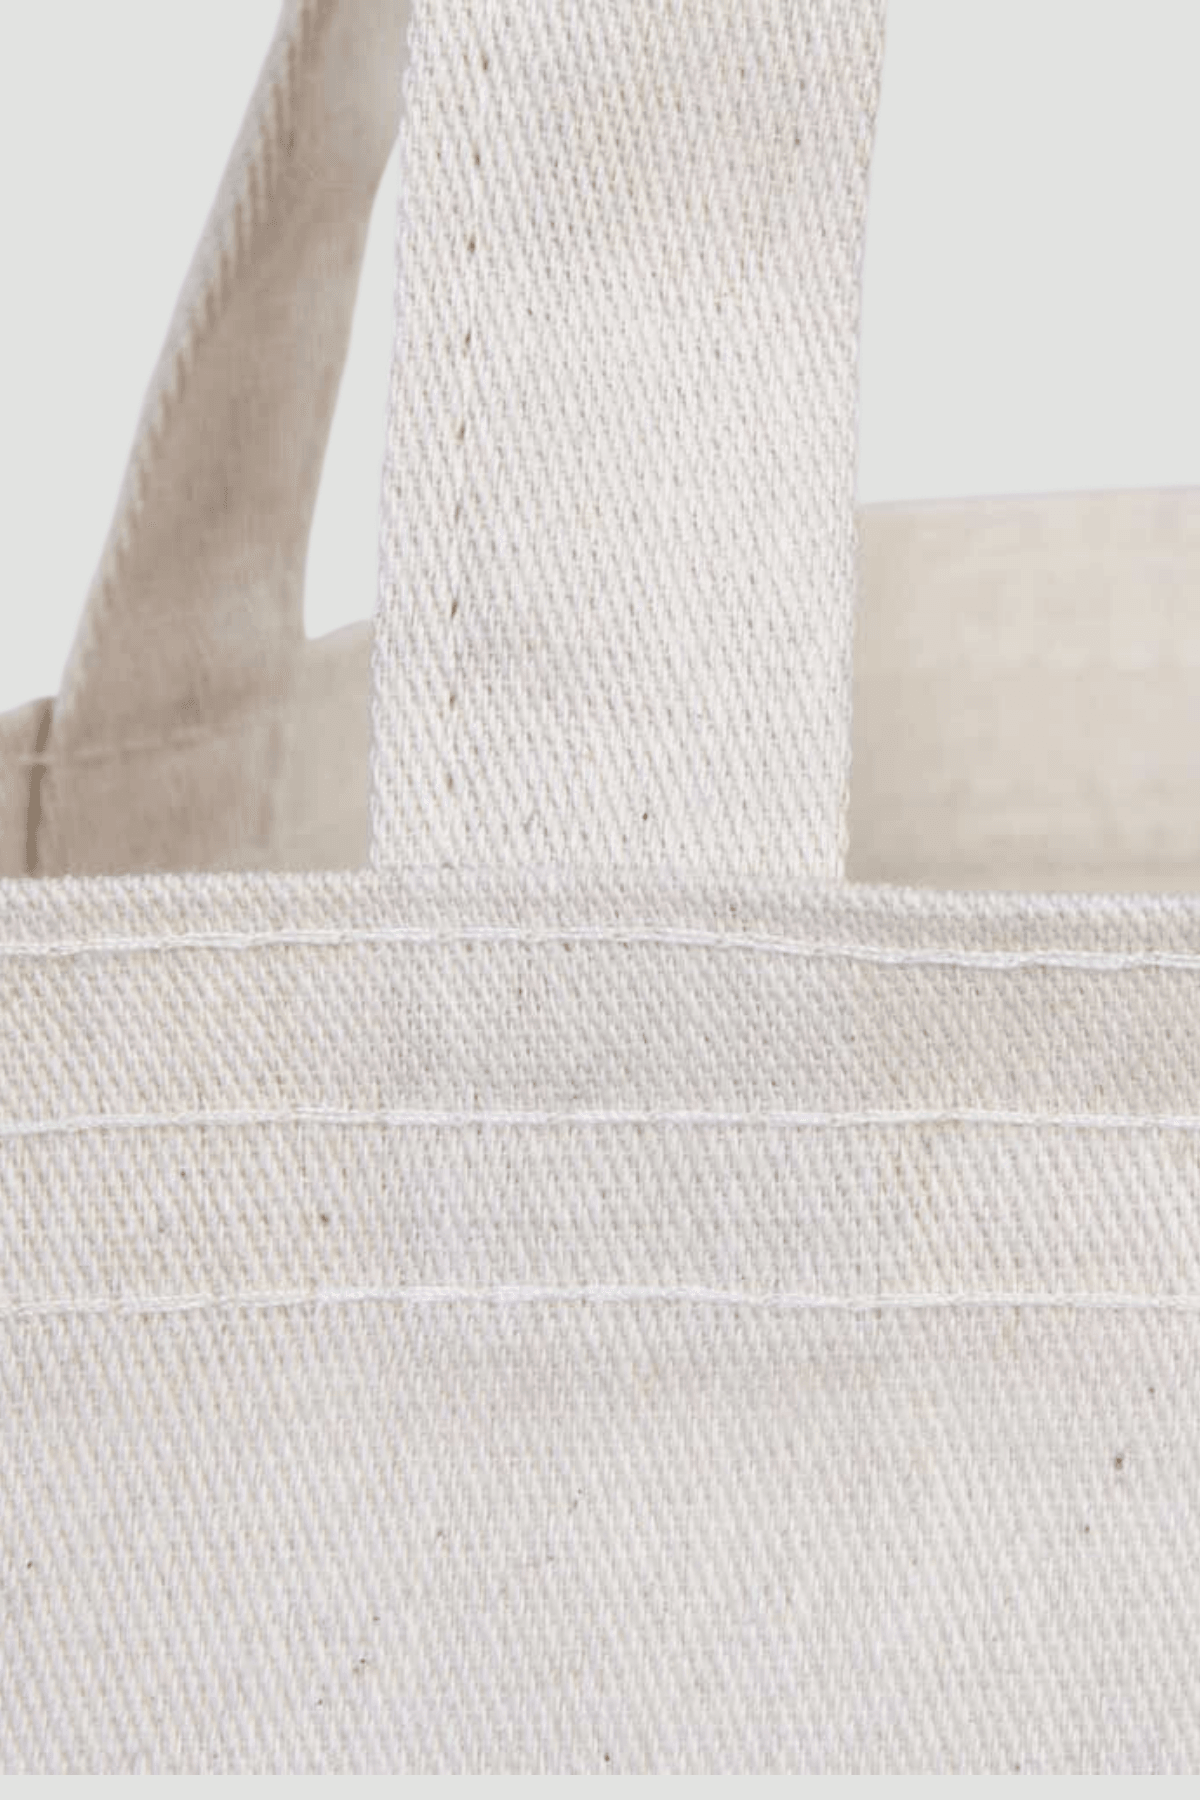 Line Printed Cloth Bag